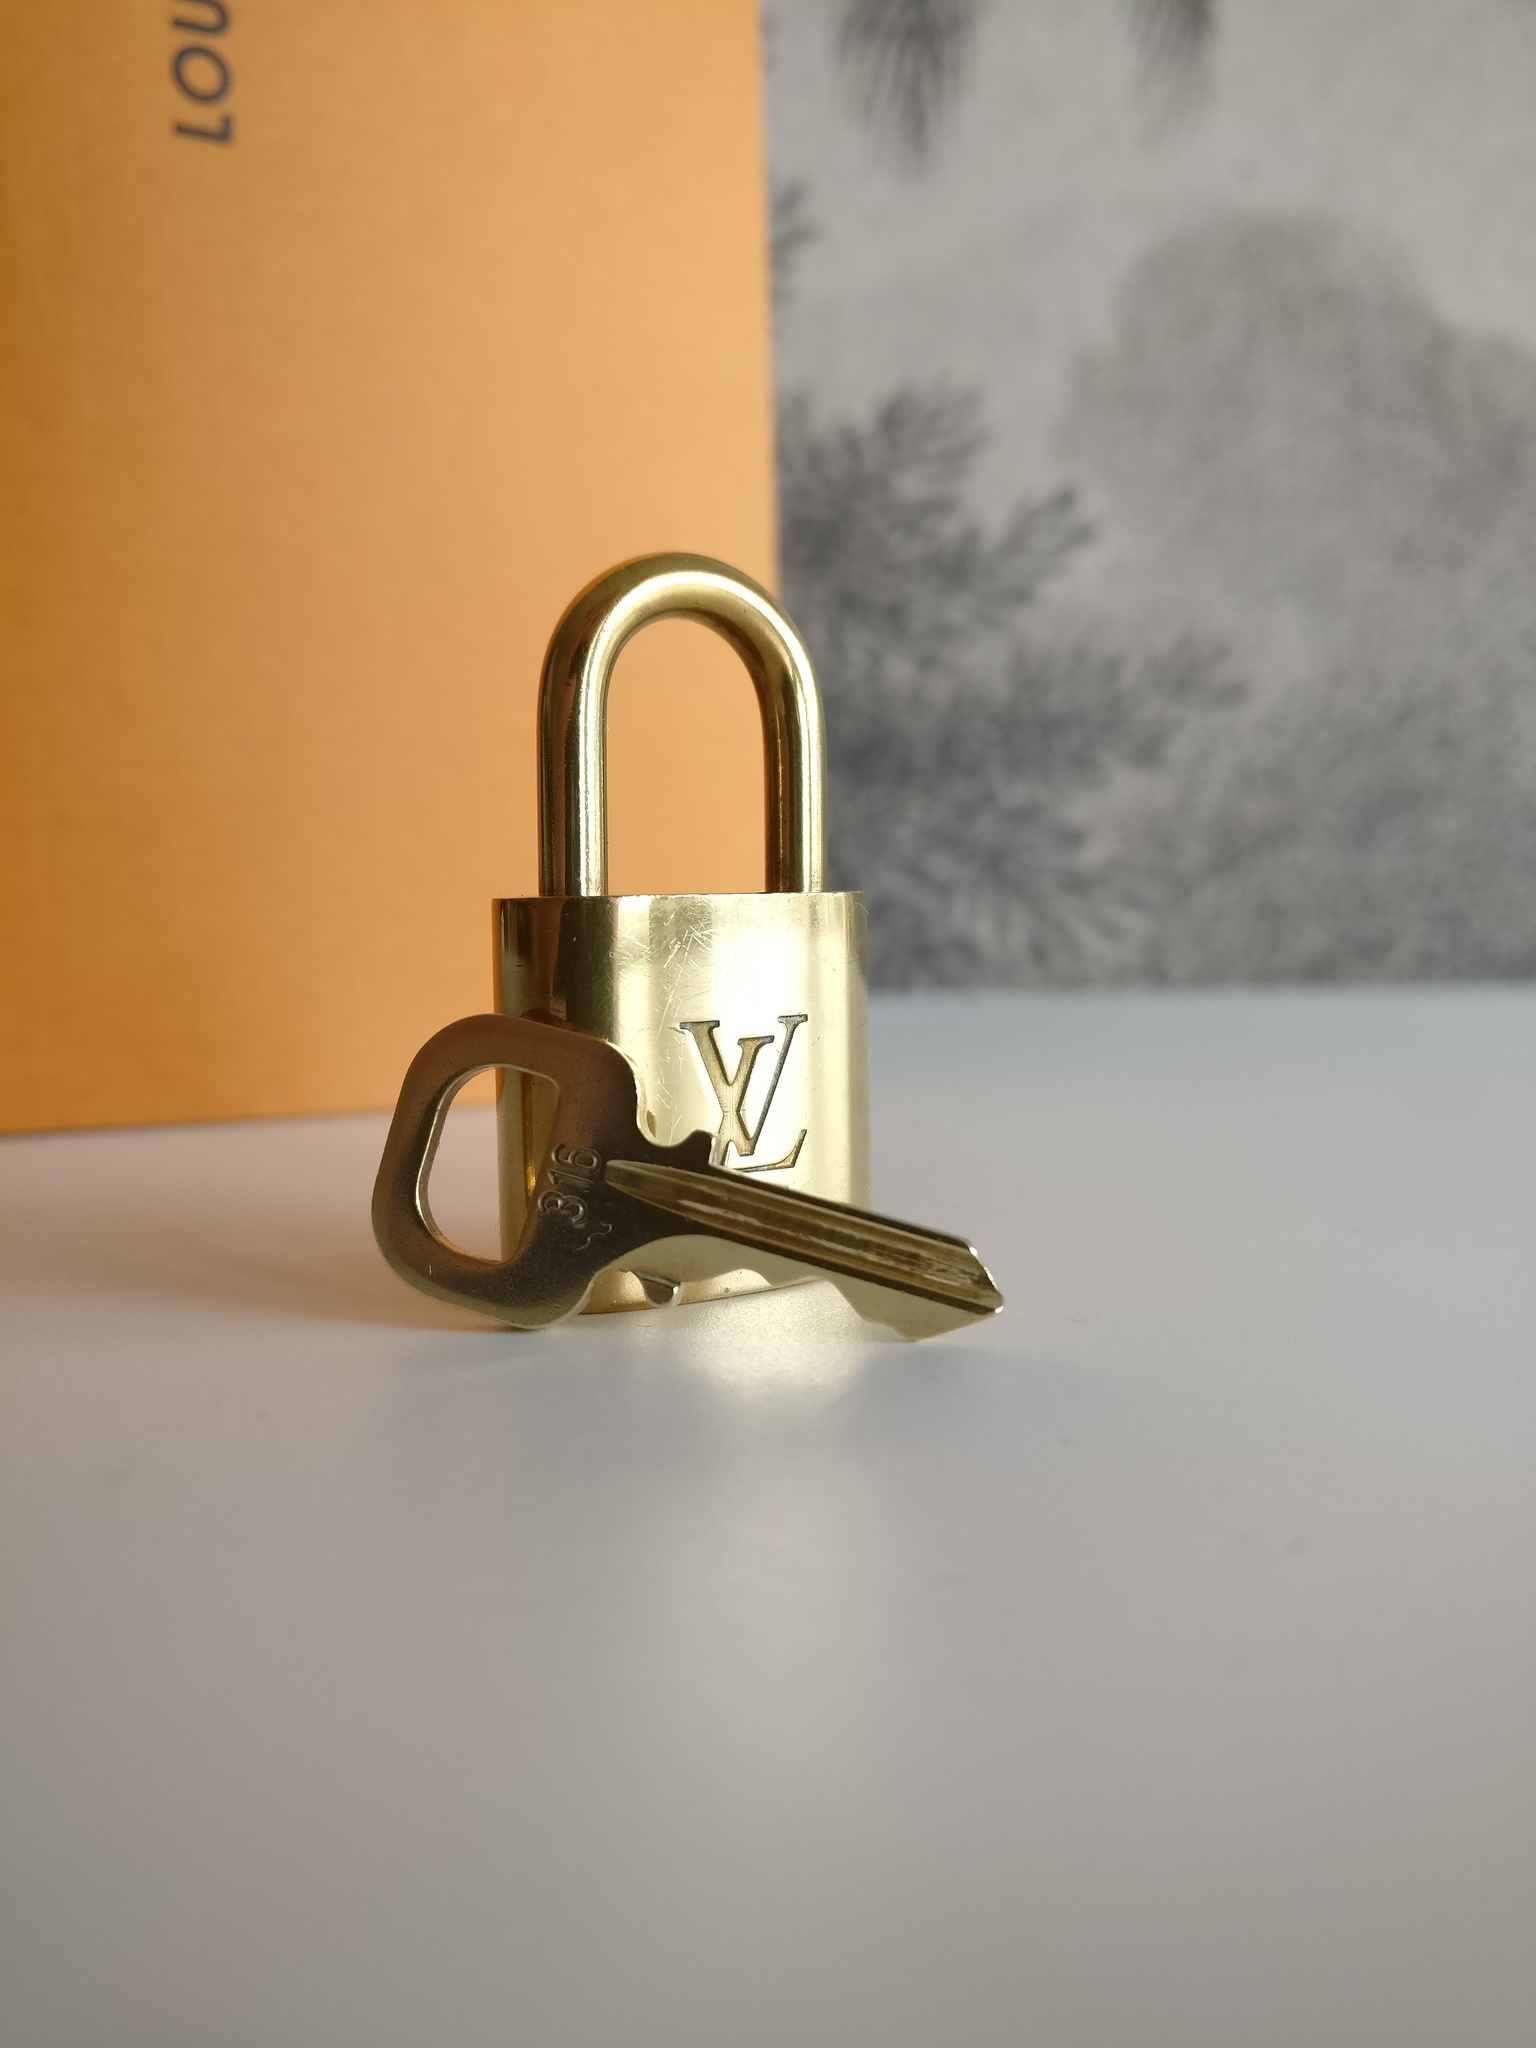 Louis Vuitton padlock 316 with key